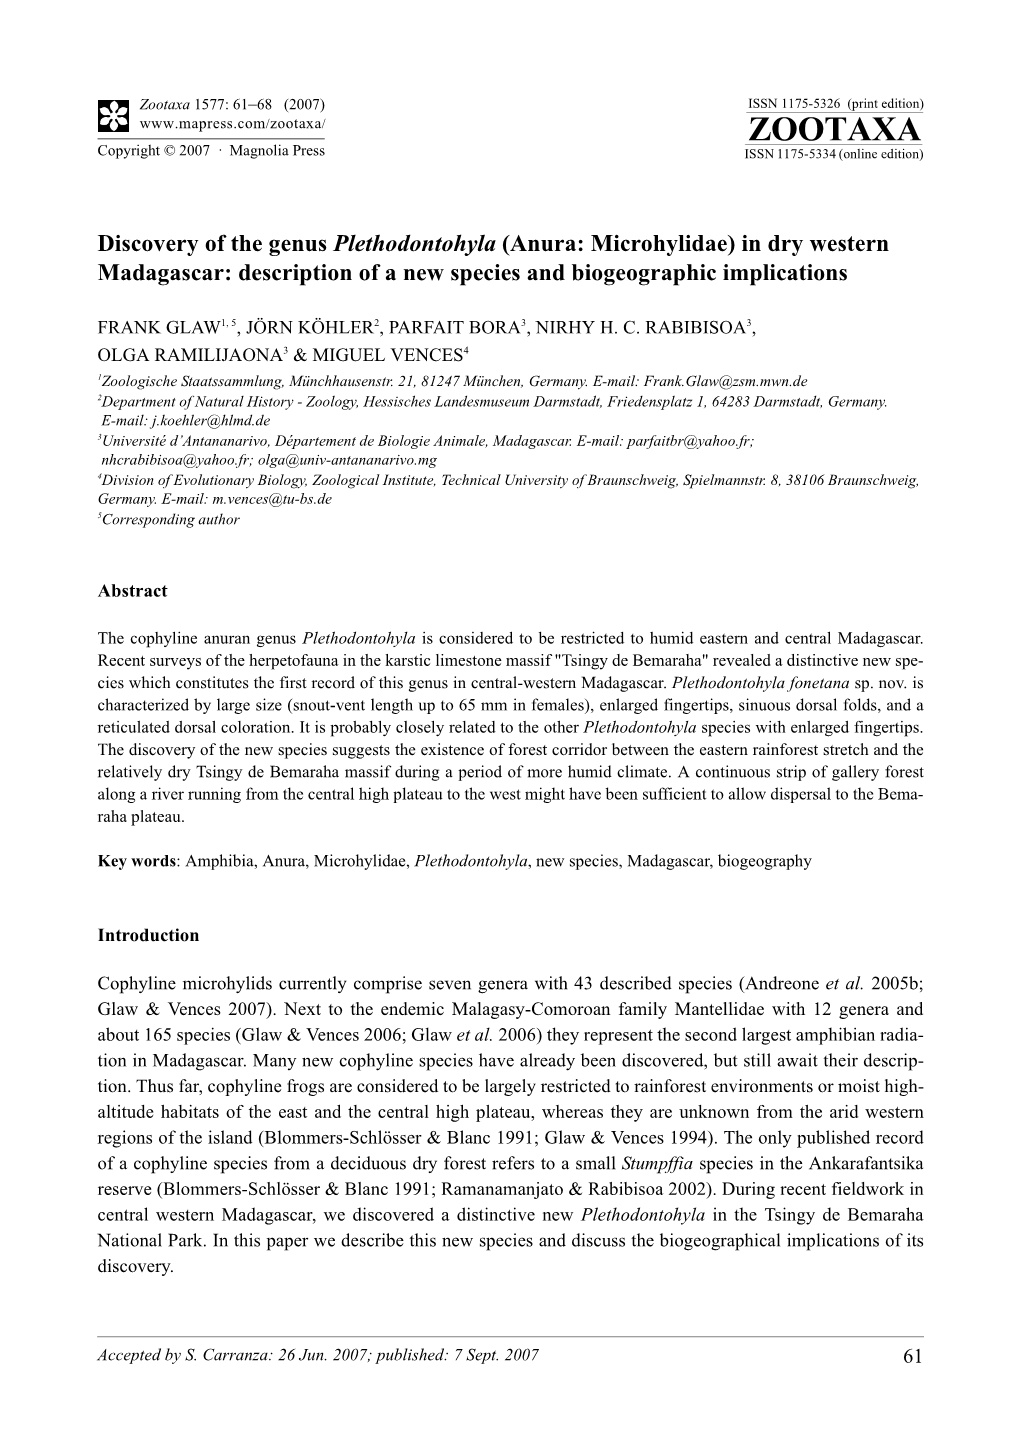 Zootaxa,Discovery of the Genus Plethodontohyla